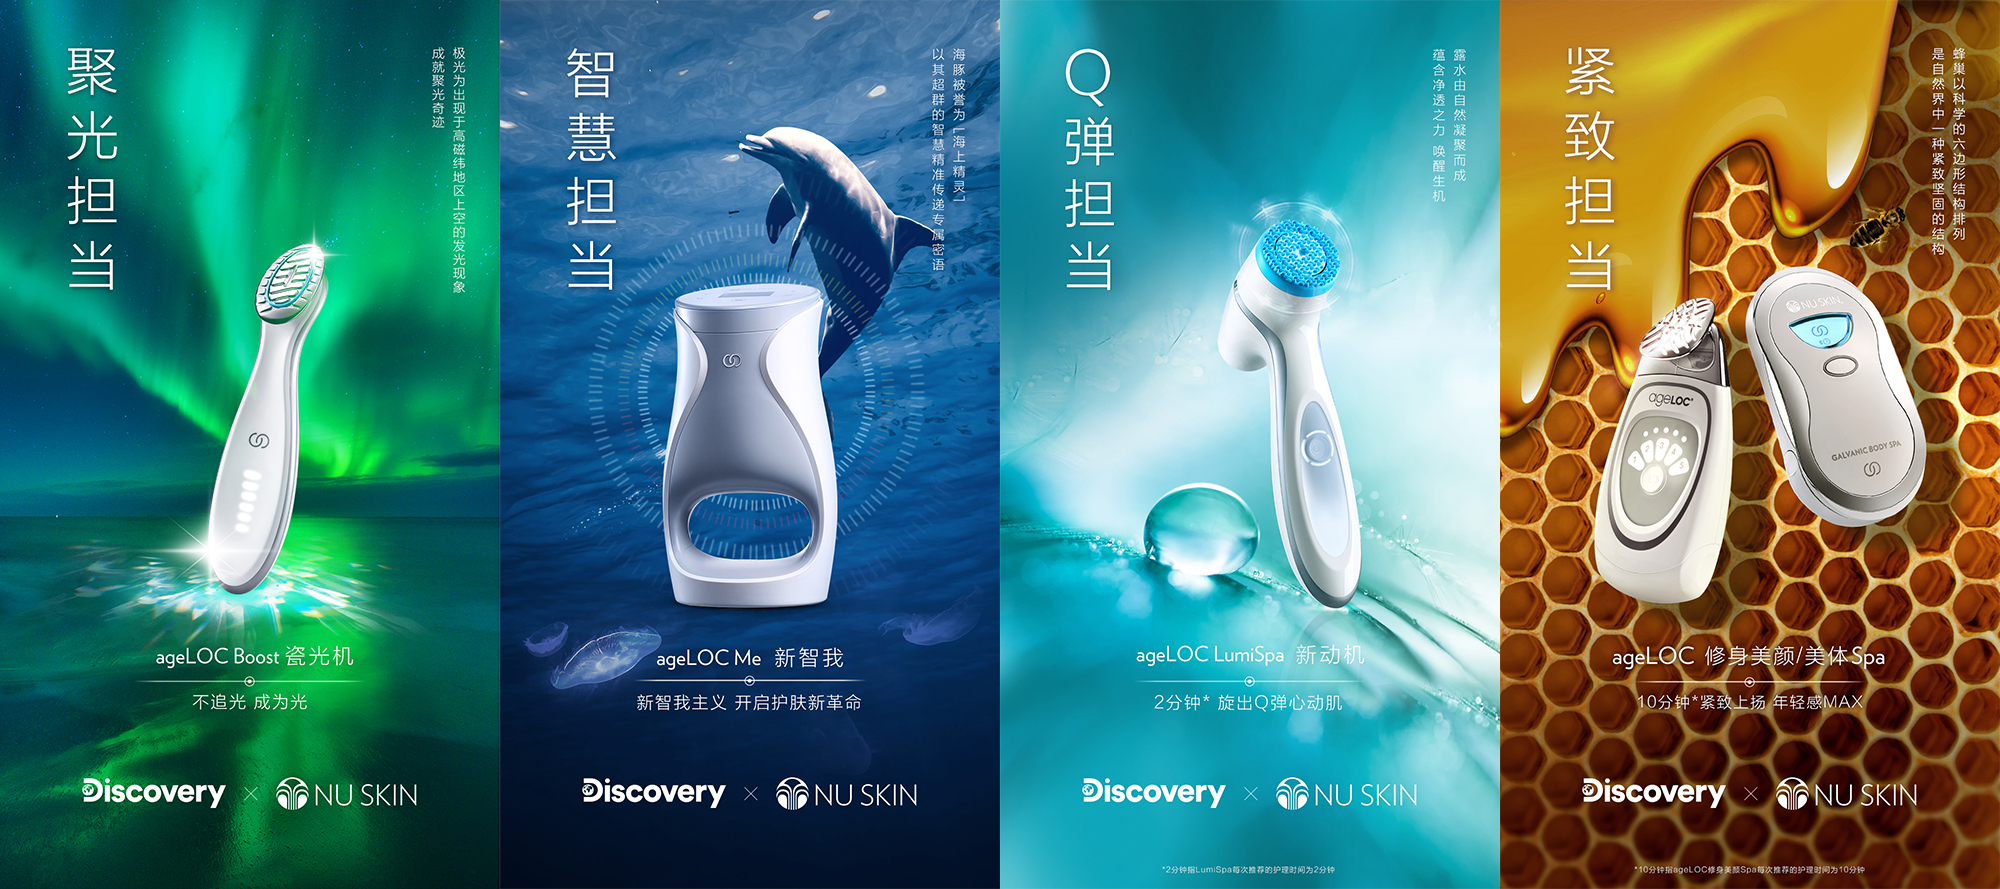 discovery探索频道nuskin如新强强联手解锁未来护肤科技